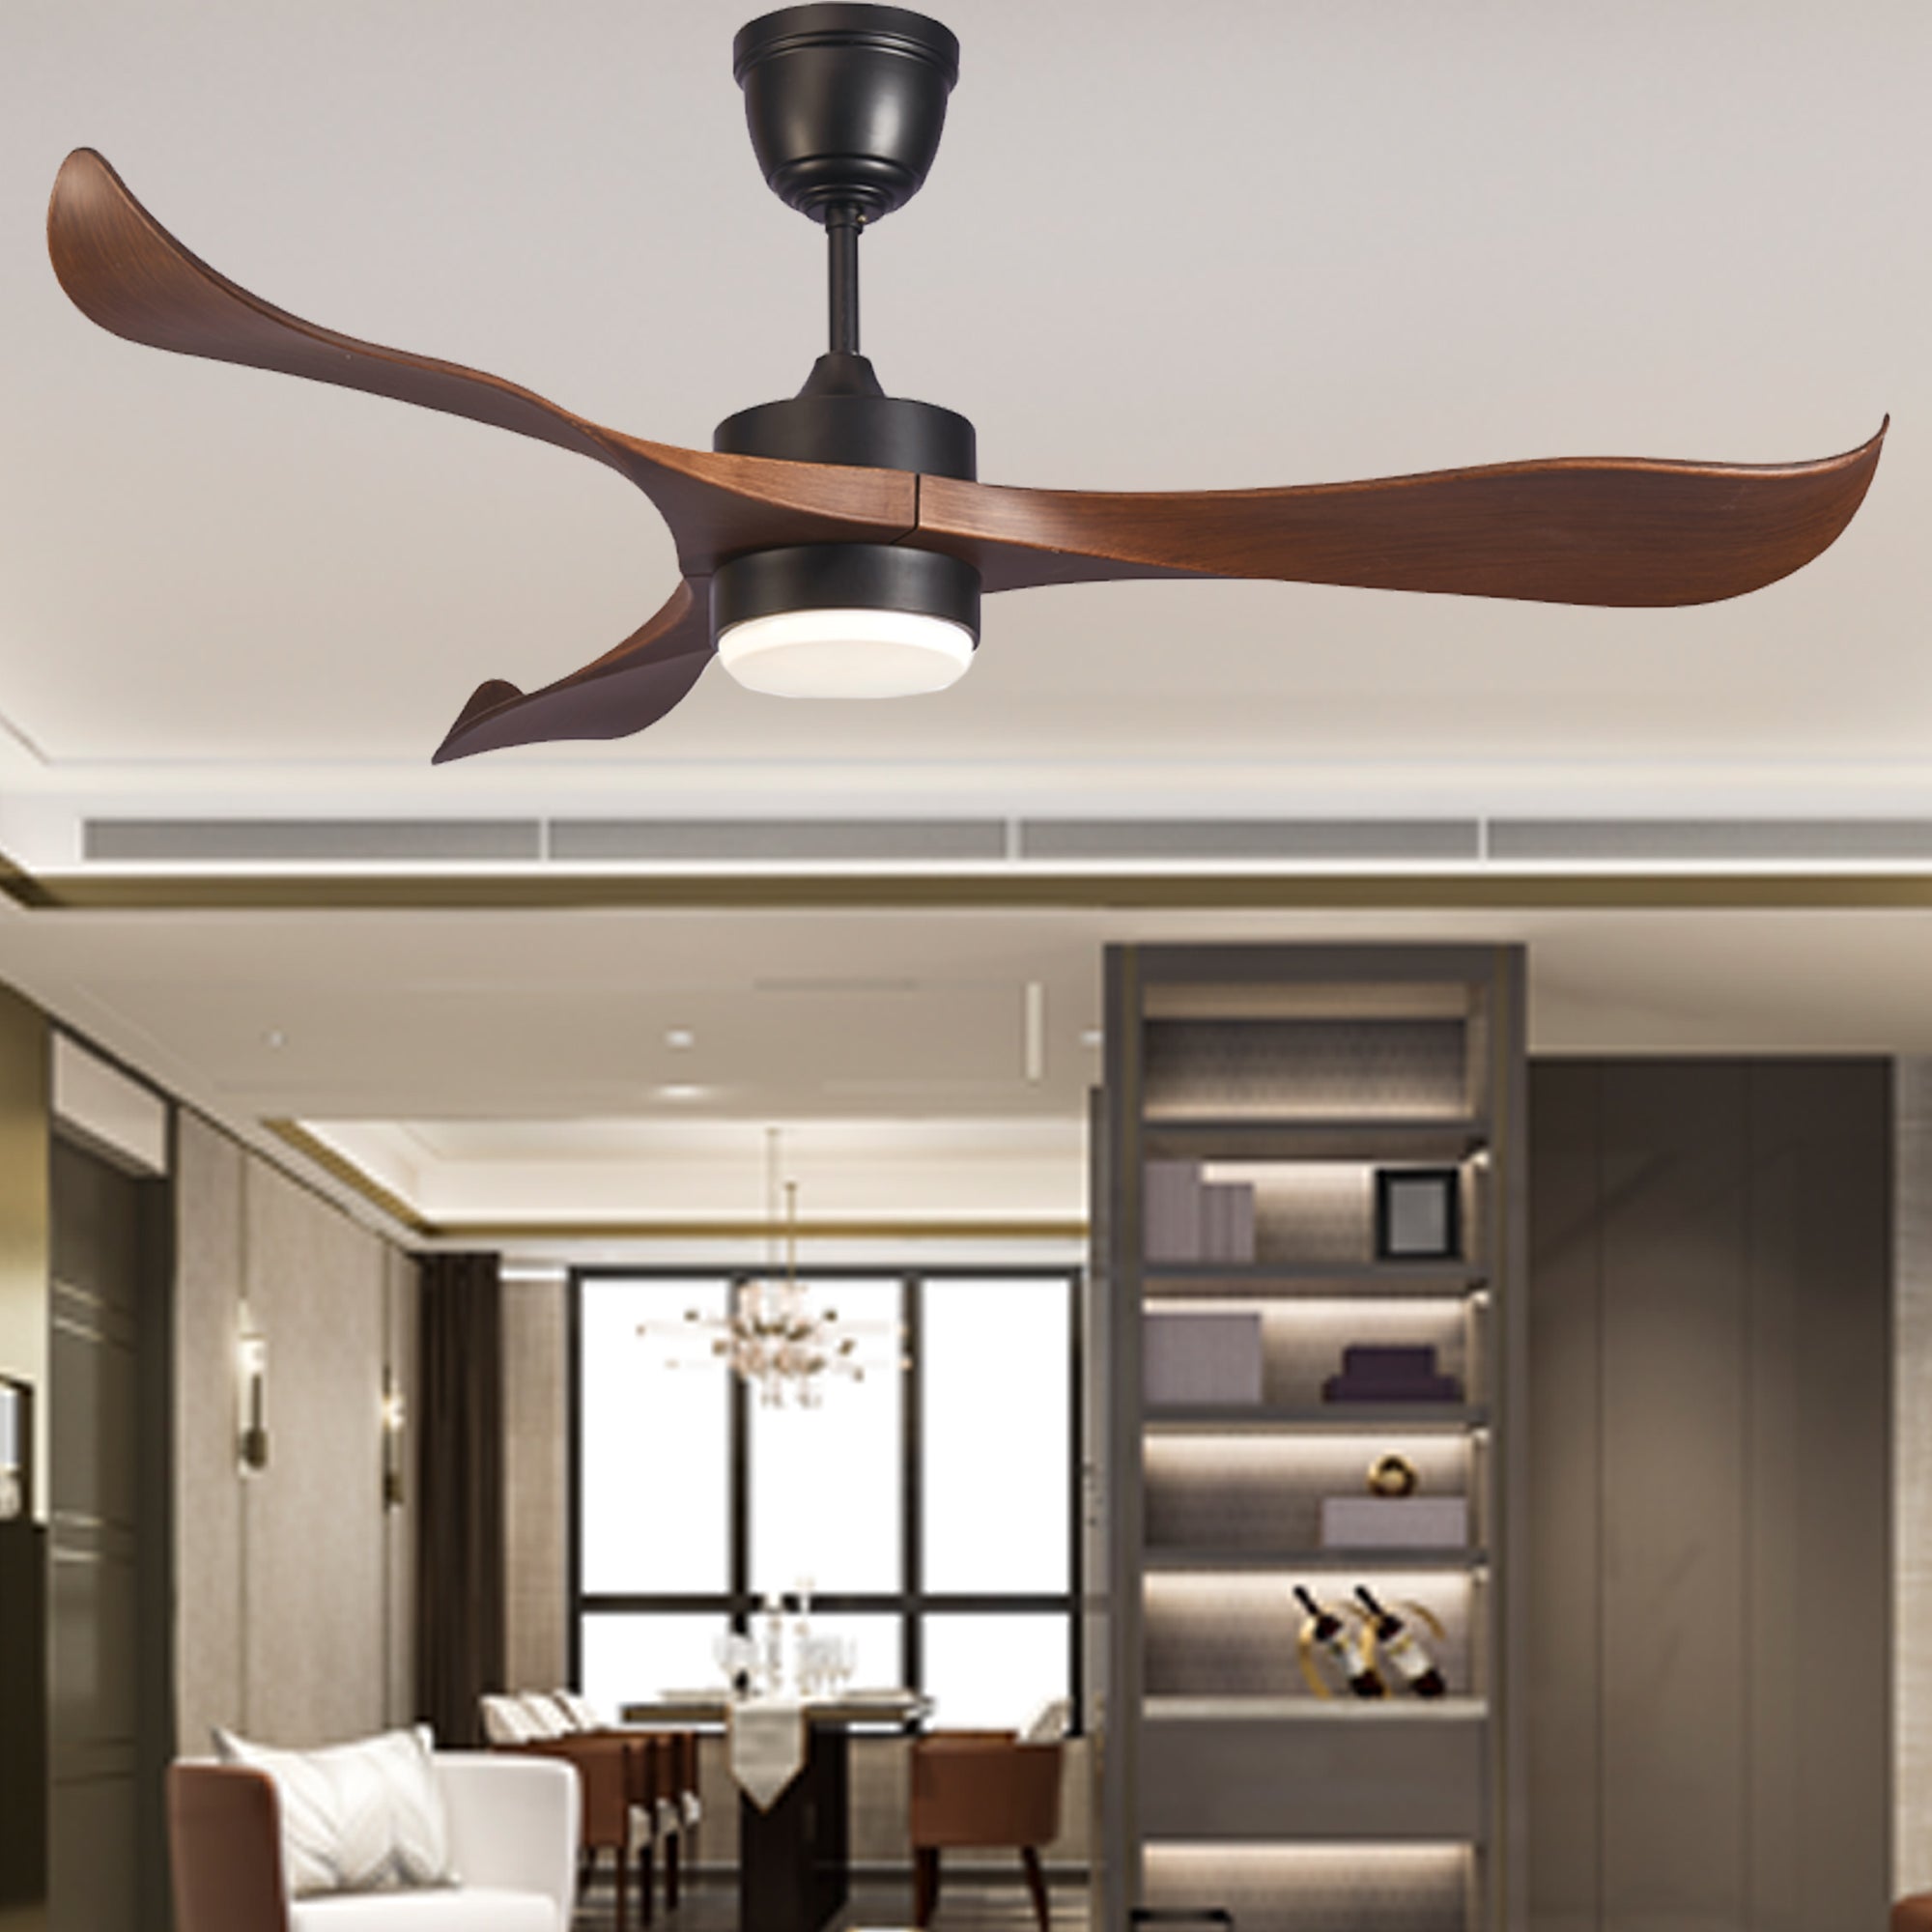 54-inch LED Light Ceiling fan with 3 Wooden Blades (Brown) Fan urbancart.in